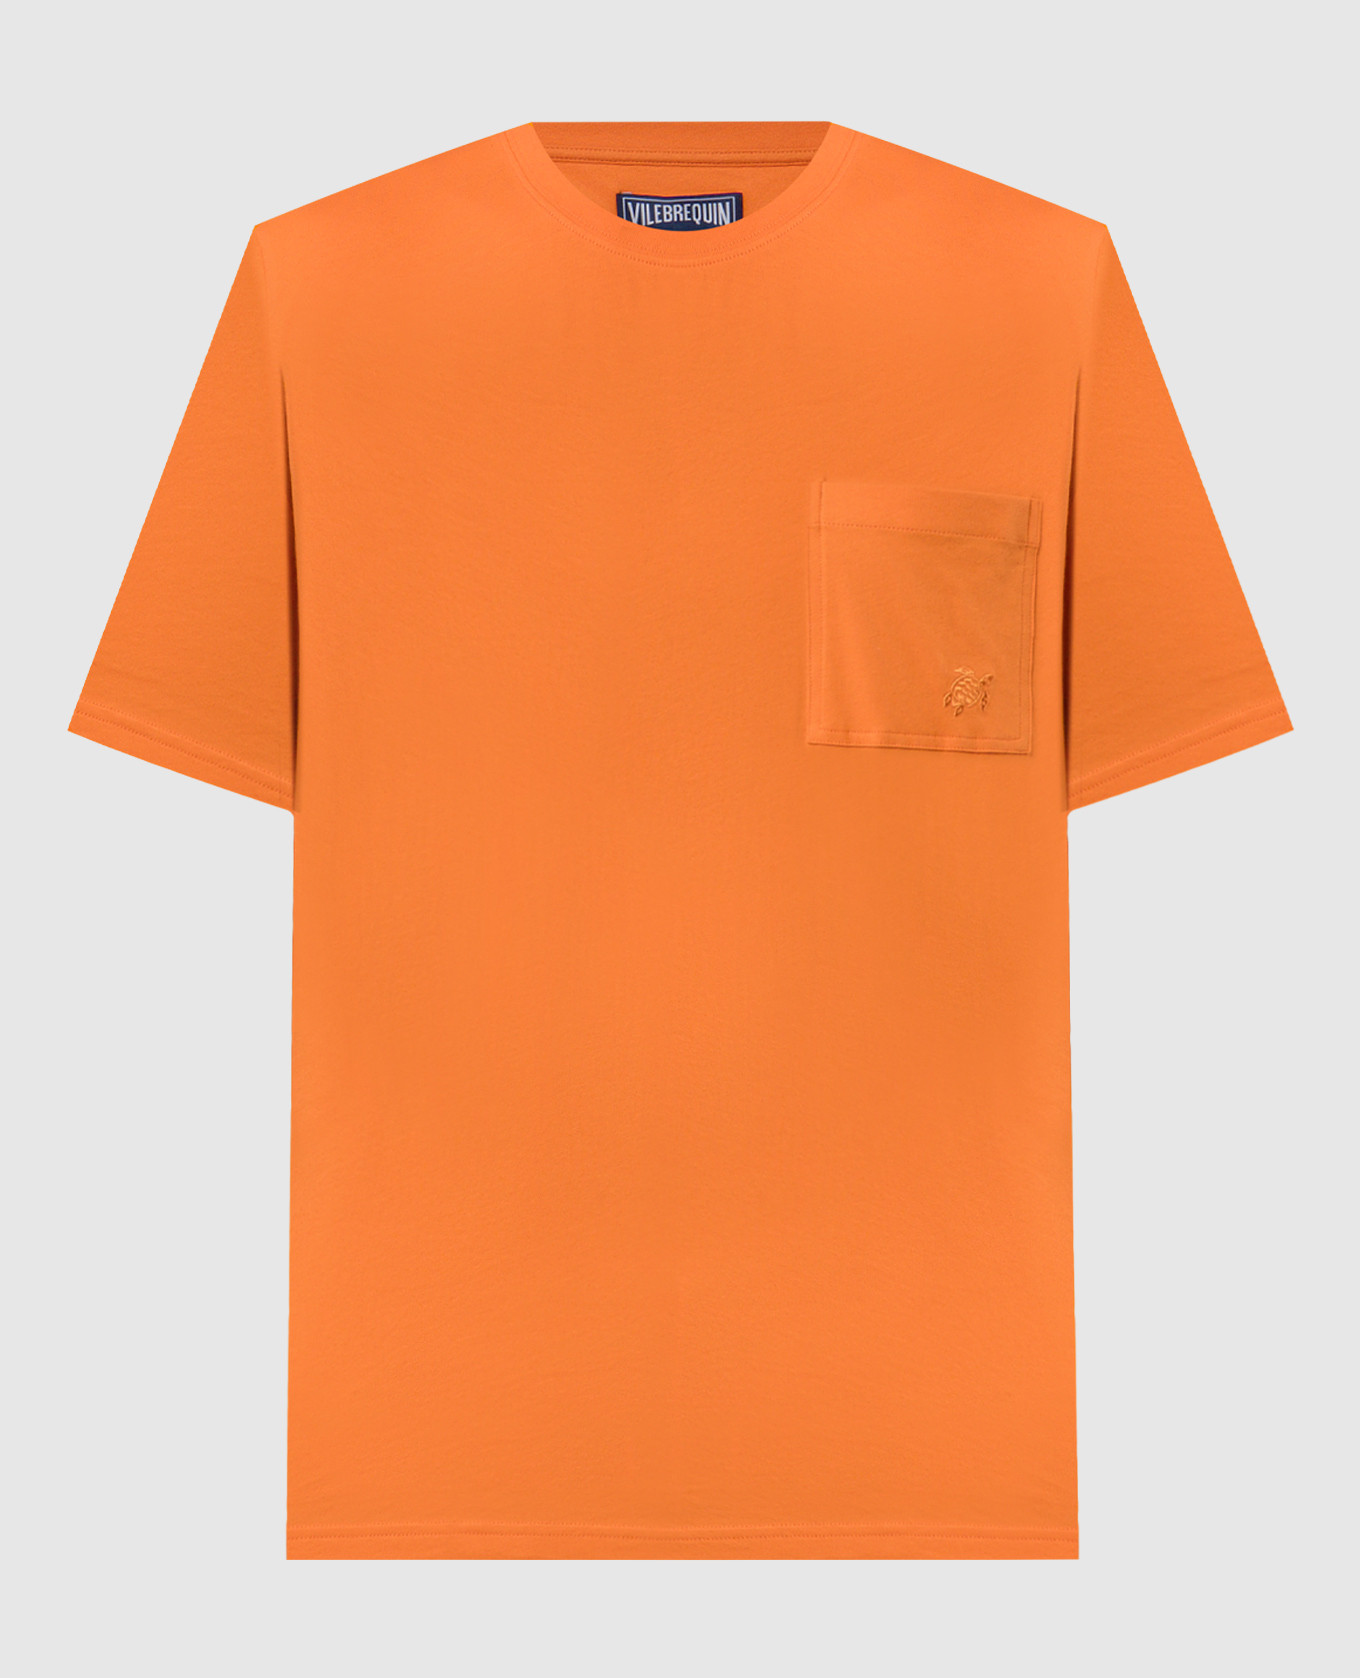 Titan orange t-shirt with logo